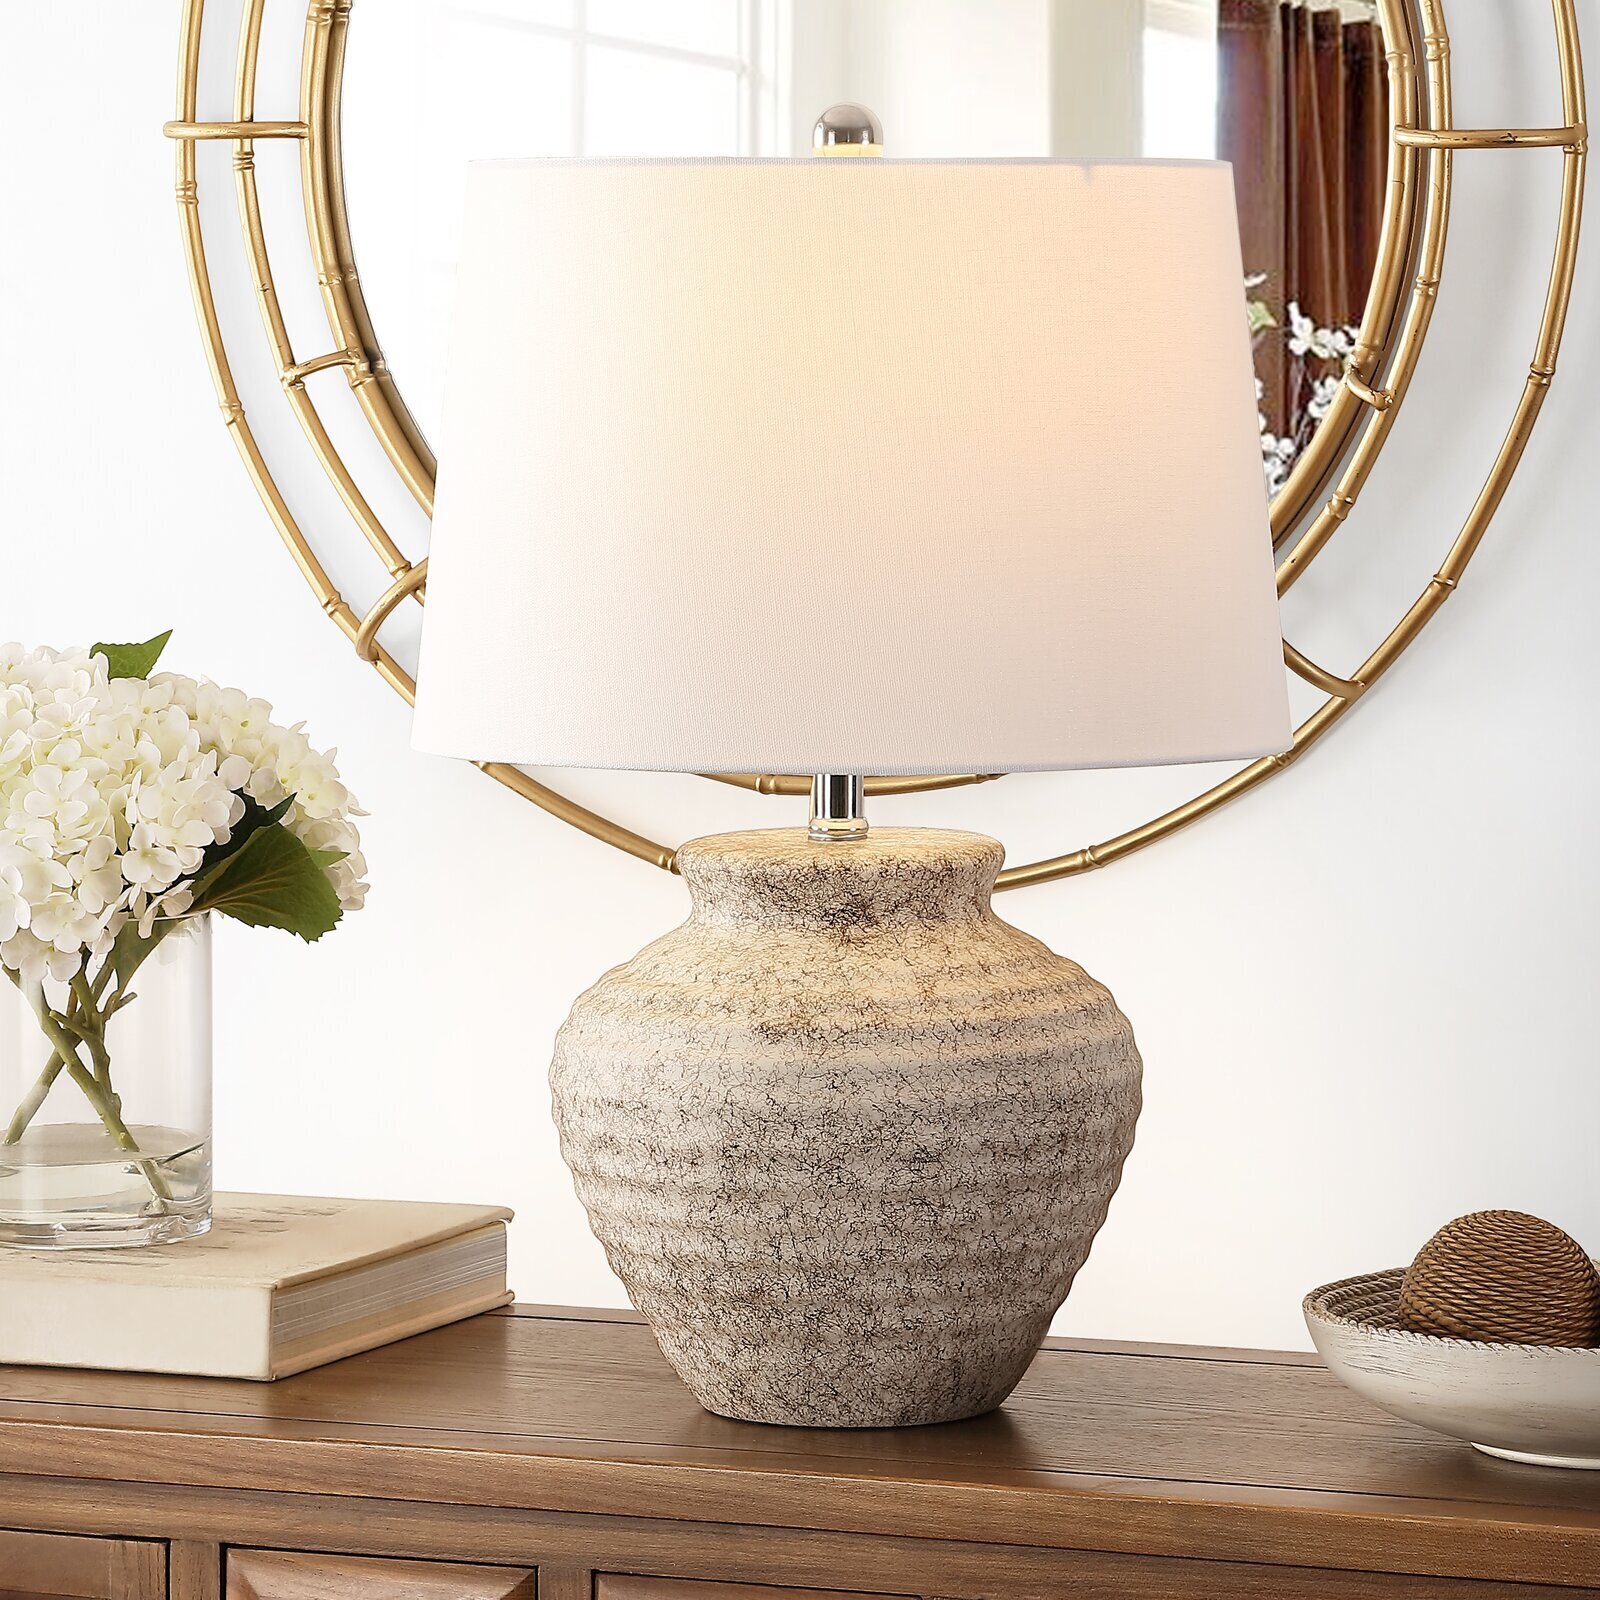 Greek Inspired Table Lamp